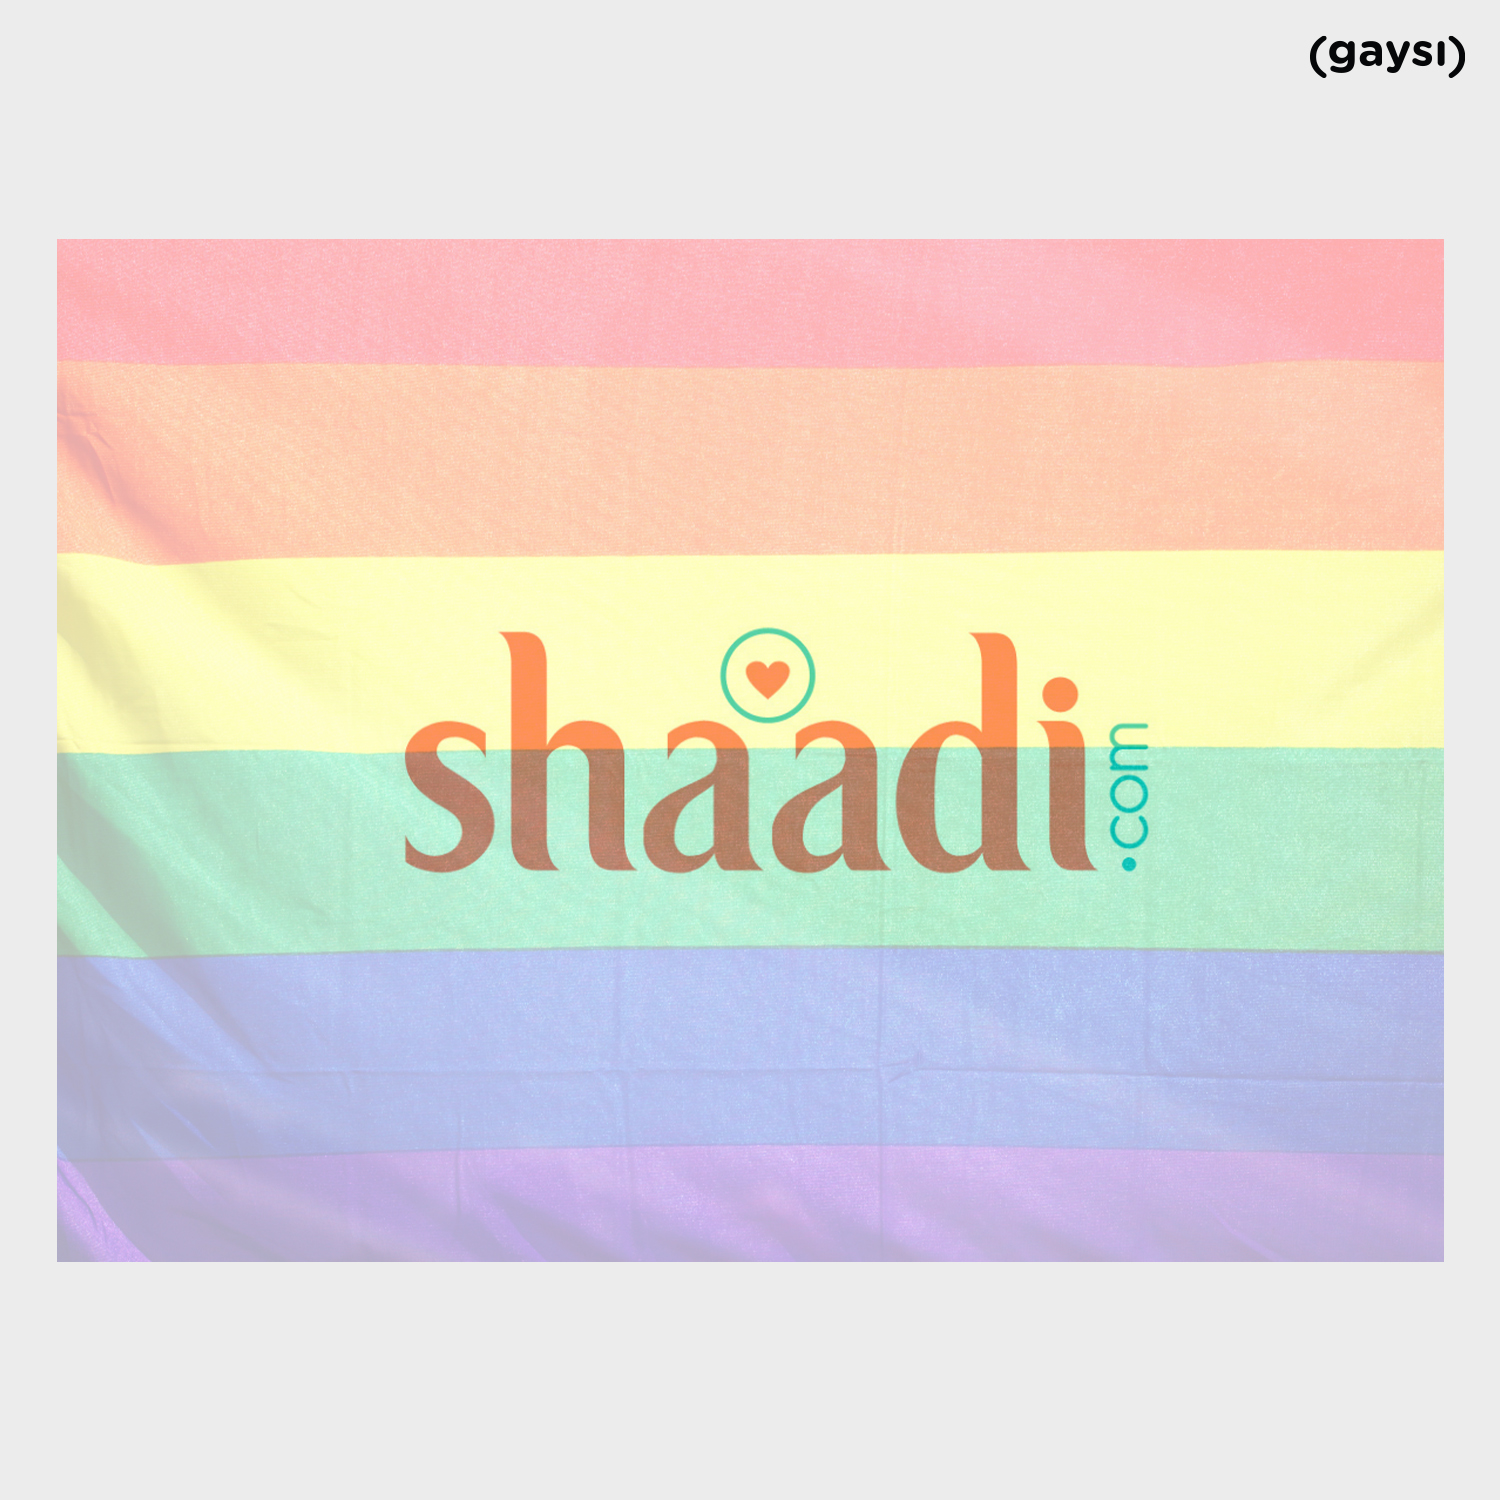 Indian Matrimonial Website Shaadi.com Begins Matchmaking For LGBTQIA+ People